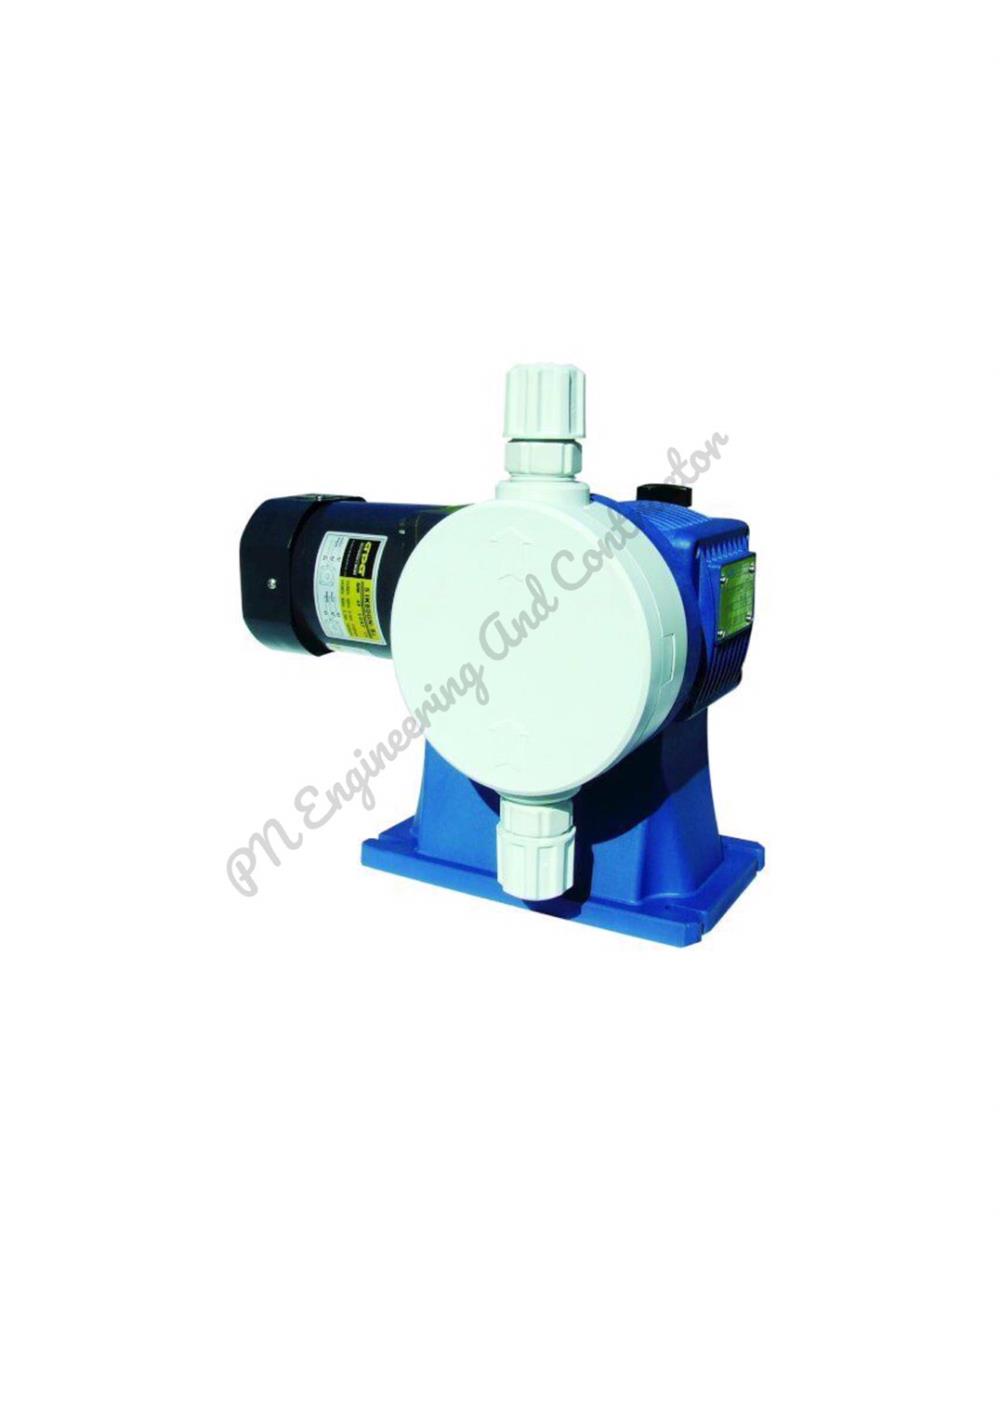 Metering Pump / Dosing pump,metering pump,SEKO PUMP,Pumps, Valves and Accessories/Pumps/Metering Pump